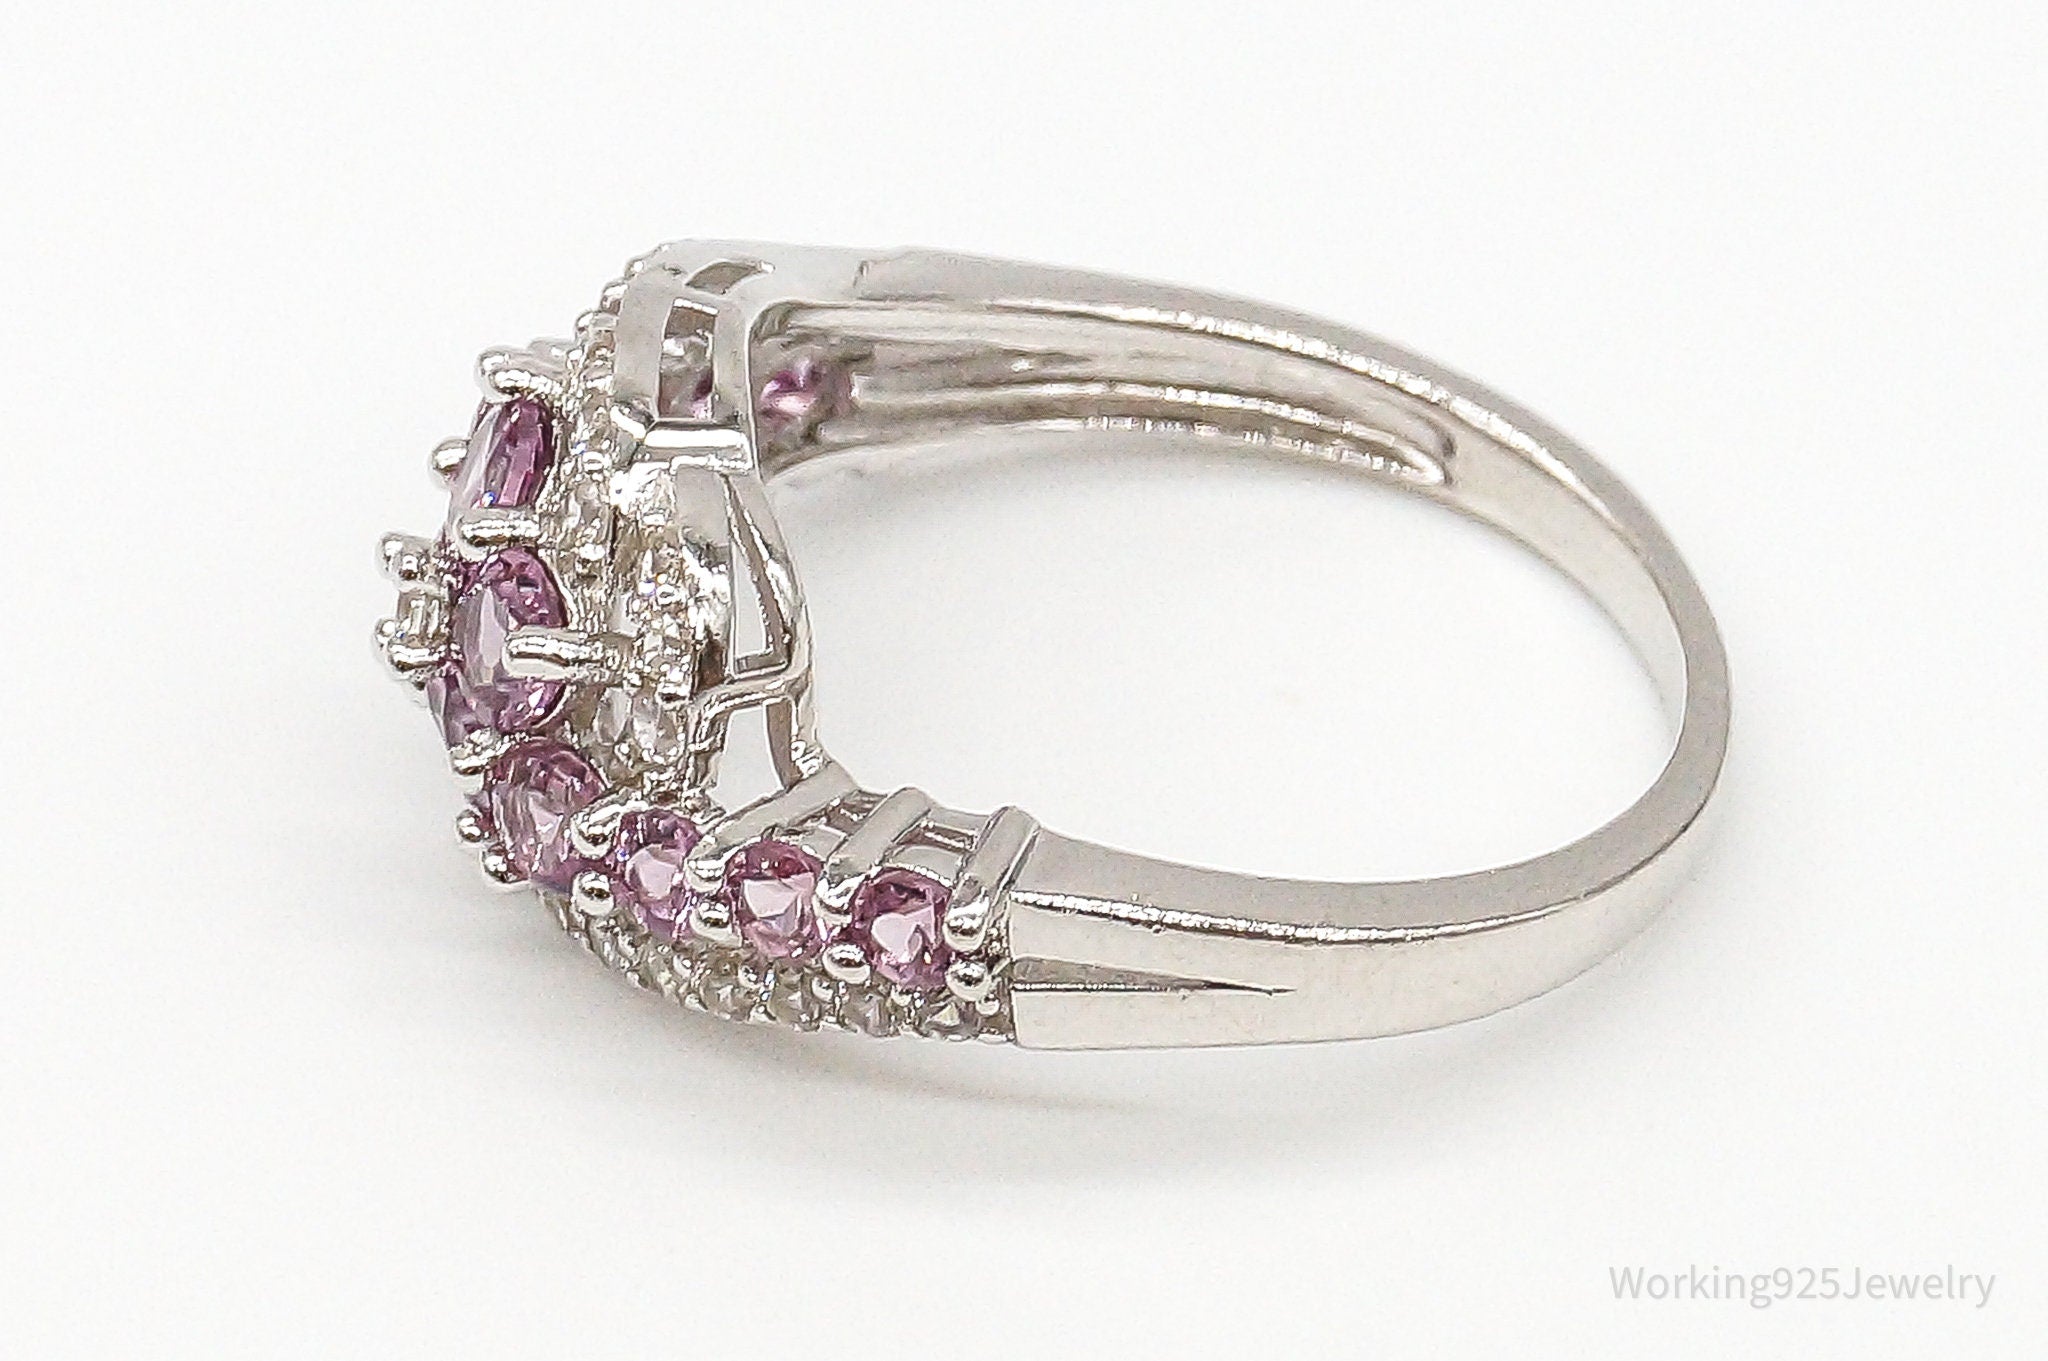 Designer BBJ Pink & White Cubic Zirconia Sterling Silver Ring - Size 9